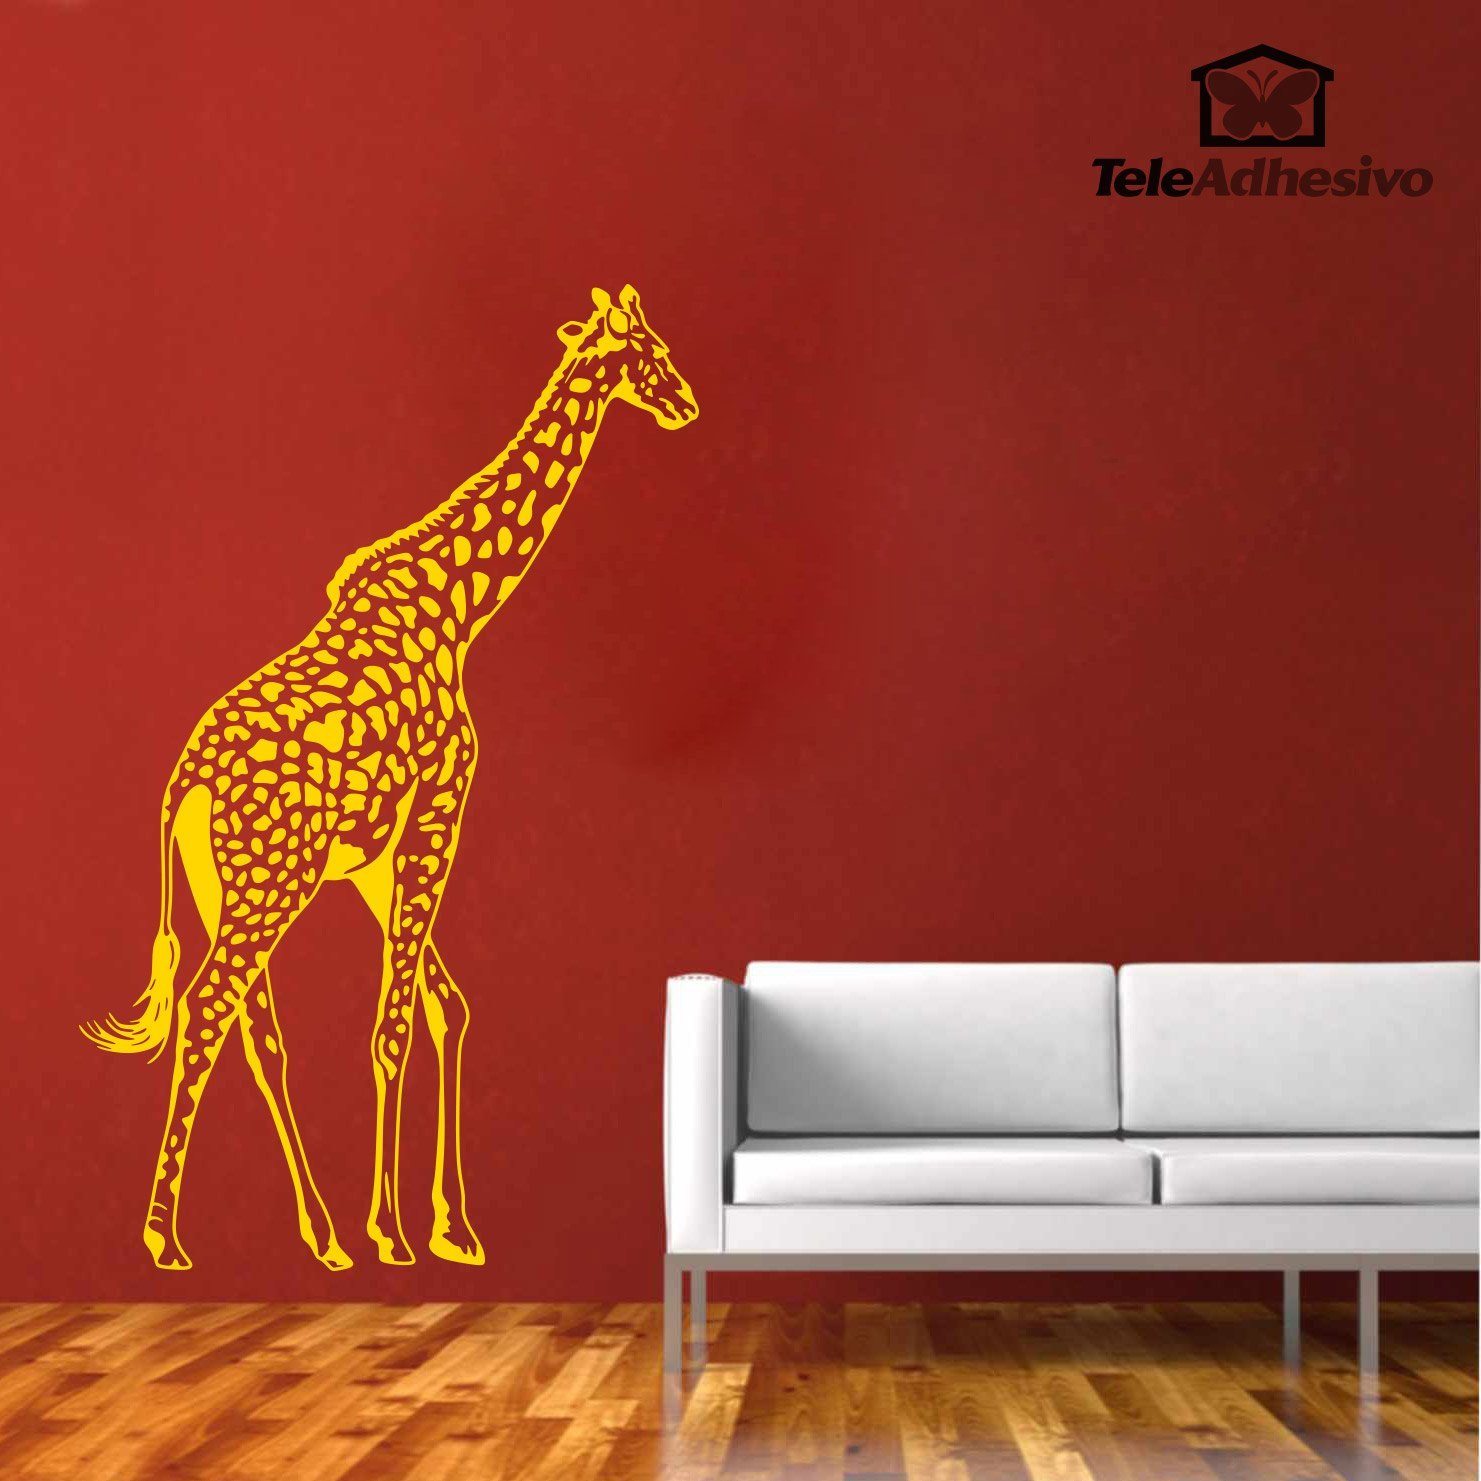 Wall Stickers: Full length giraffe